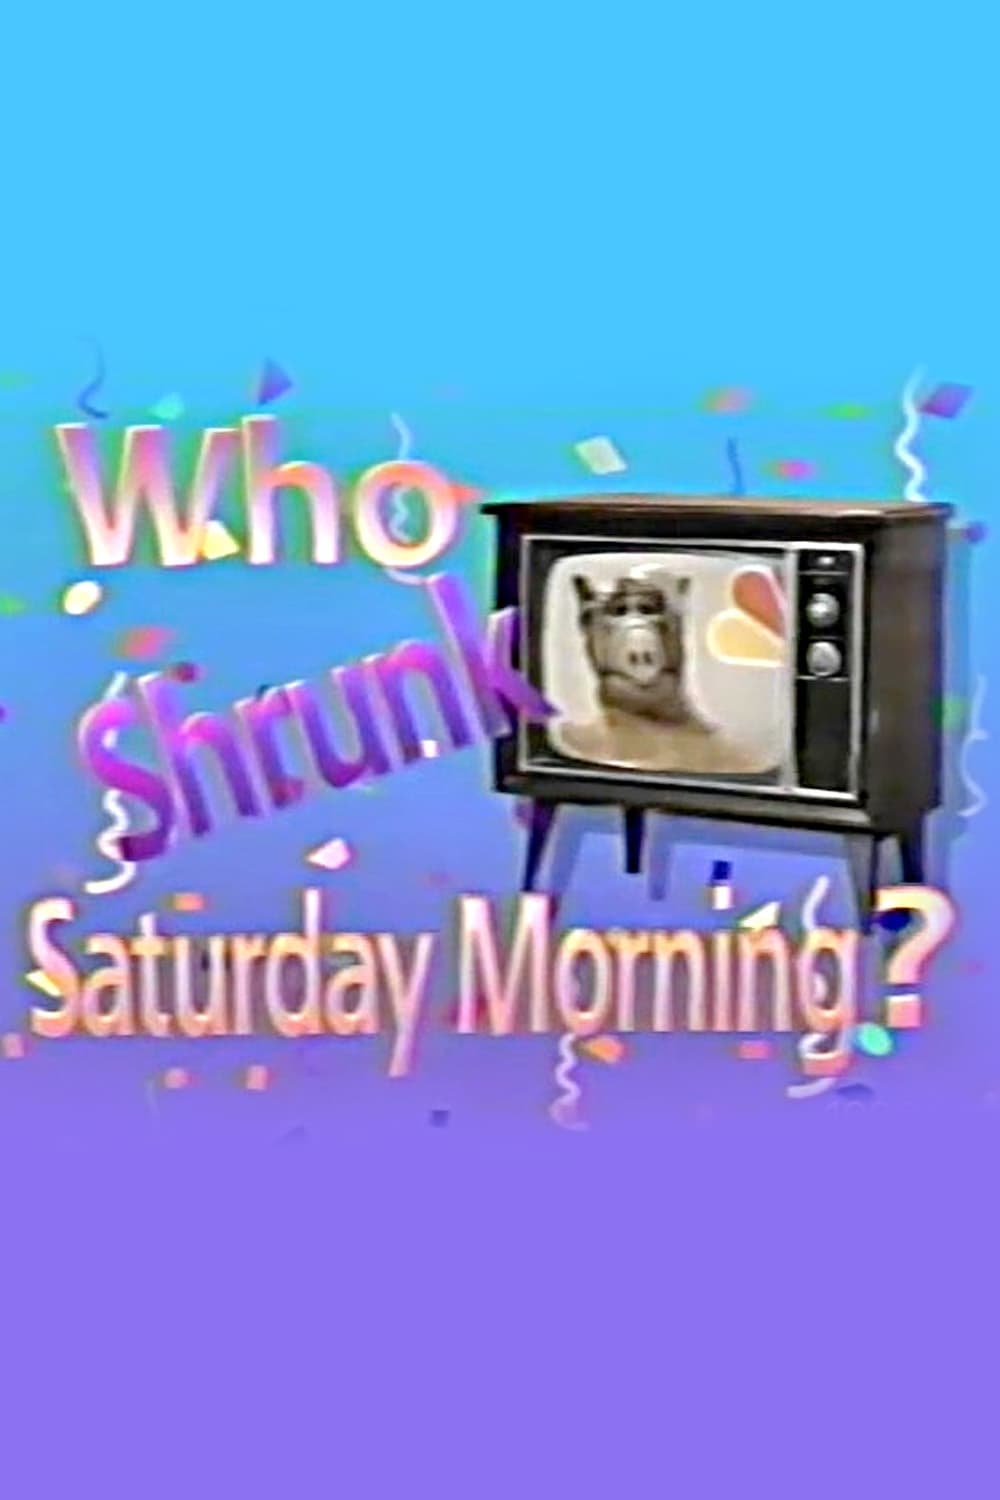 Who Shrunk Saturday Morning? (1989)